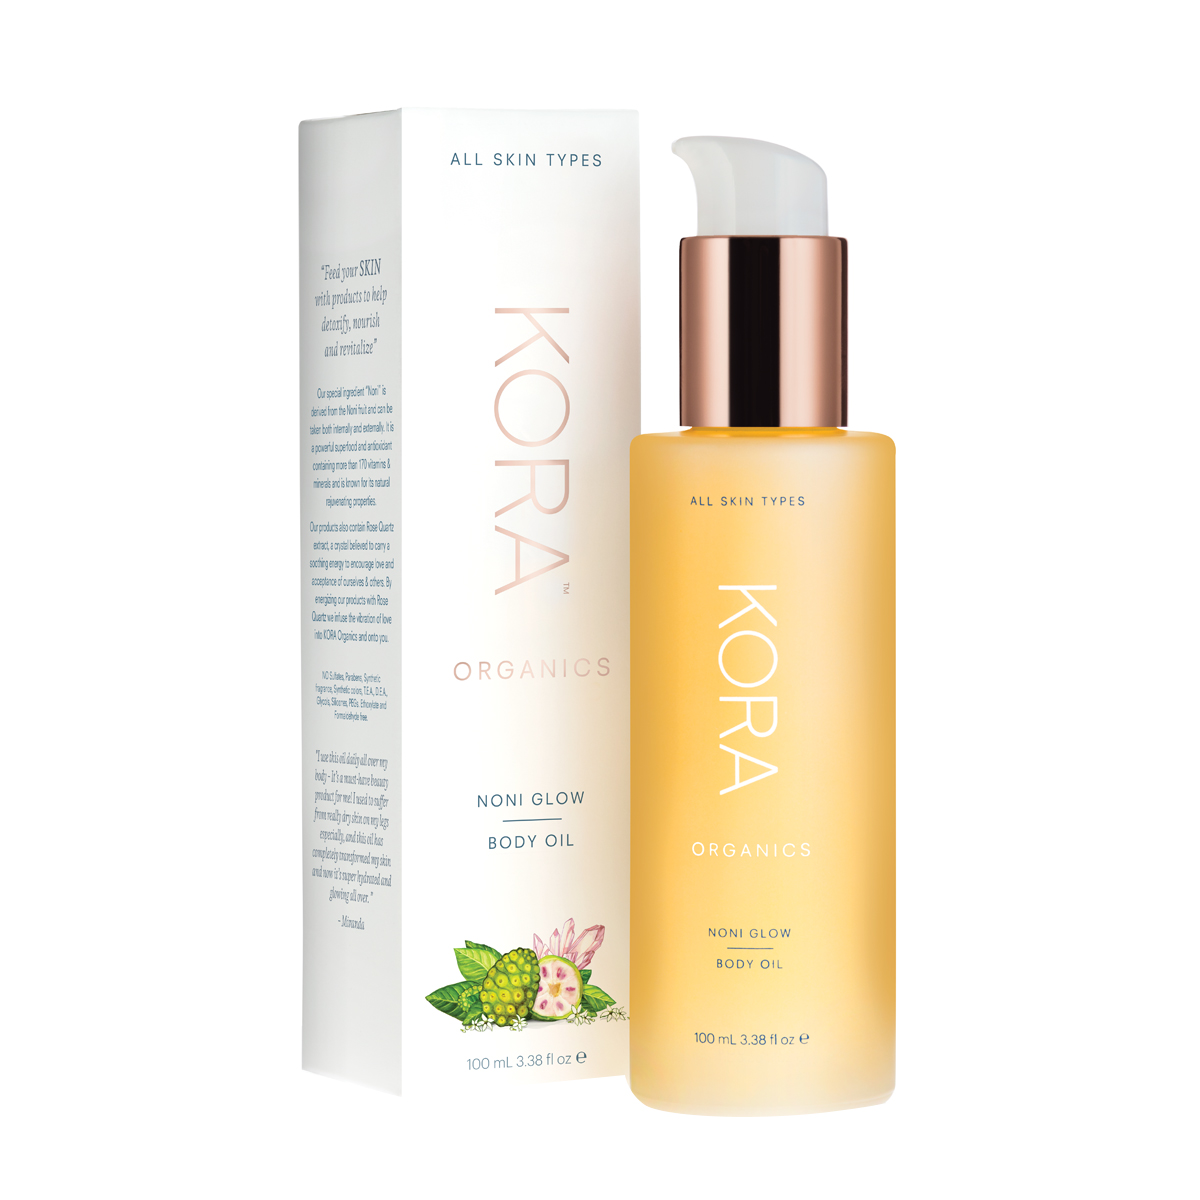 Clean Beauty Products for Mature Skin: Kora Organics Noni Glow Body Oil